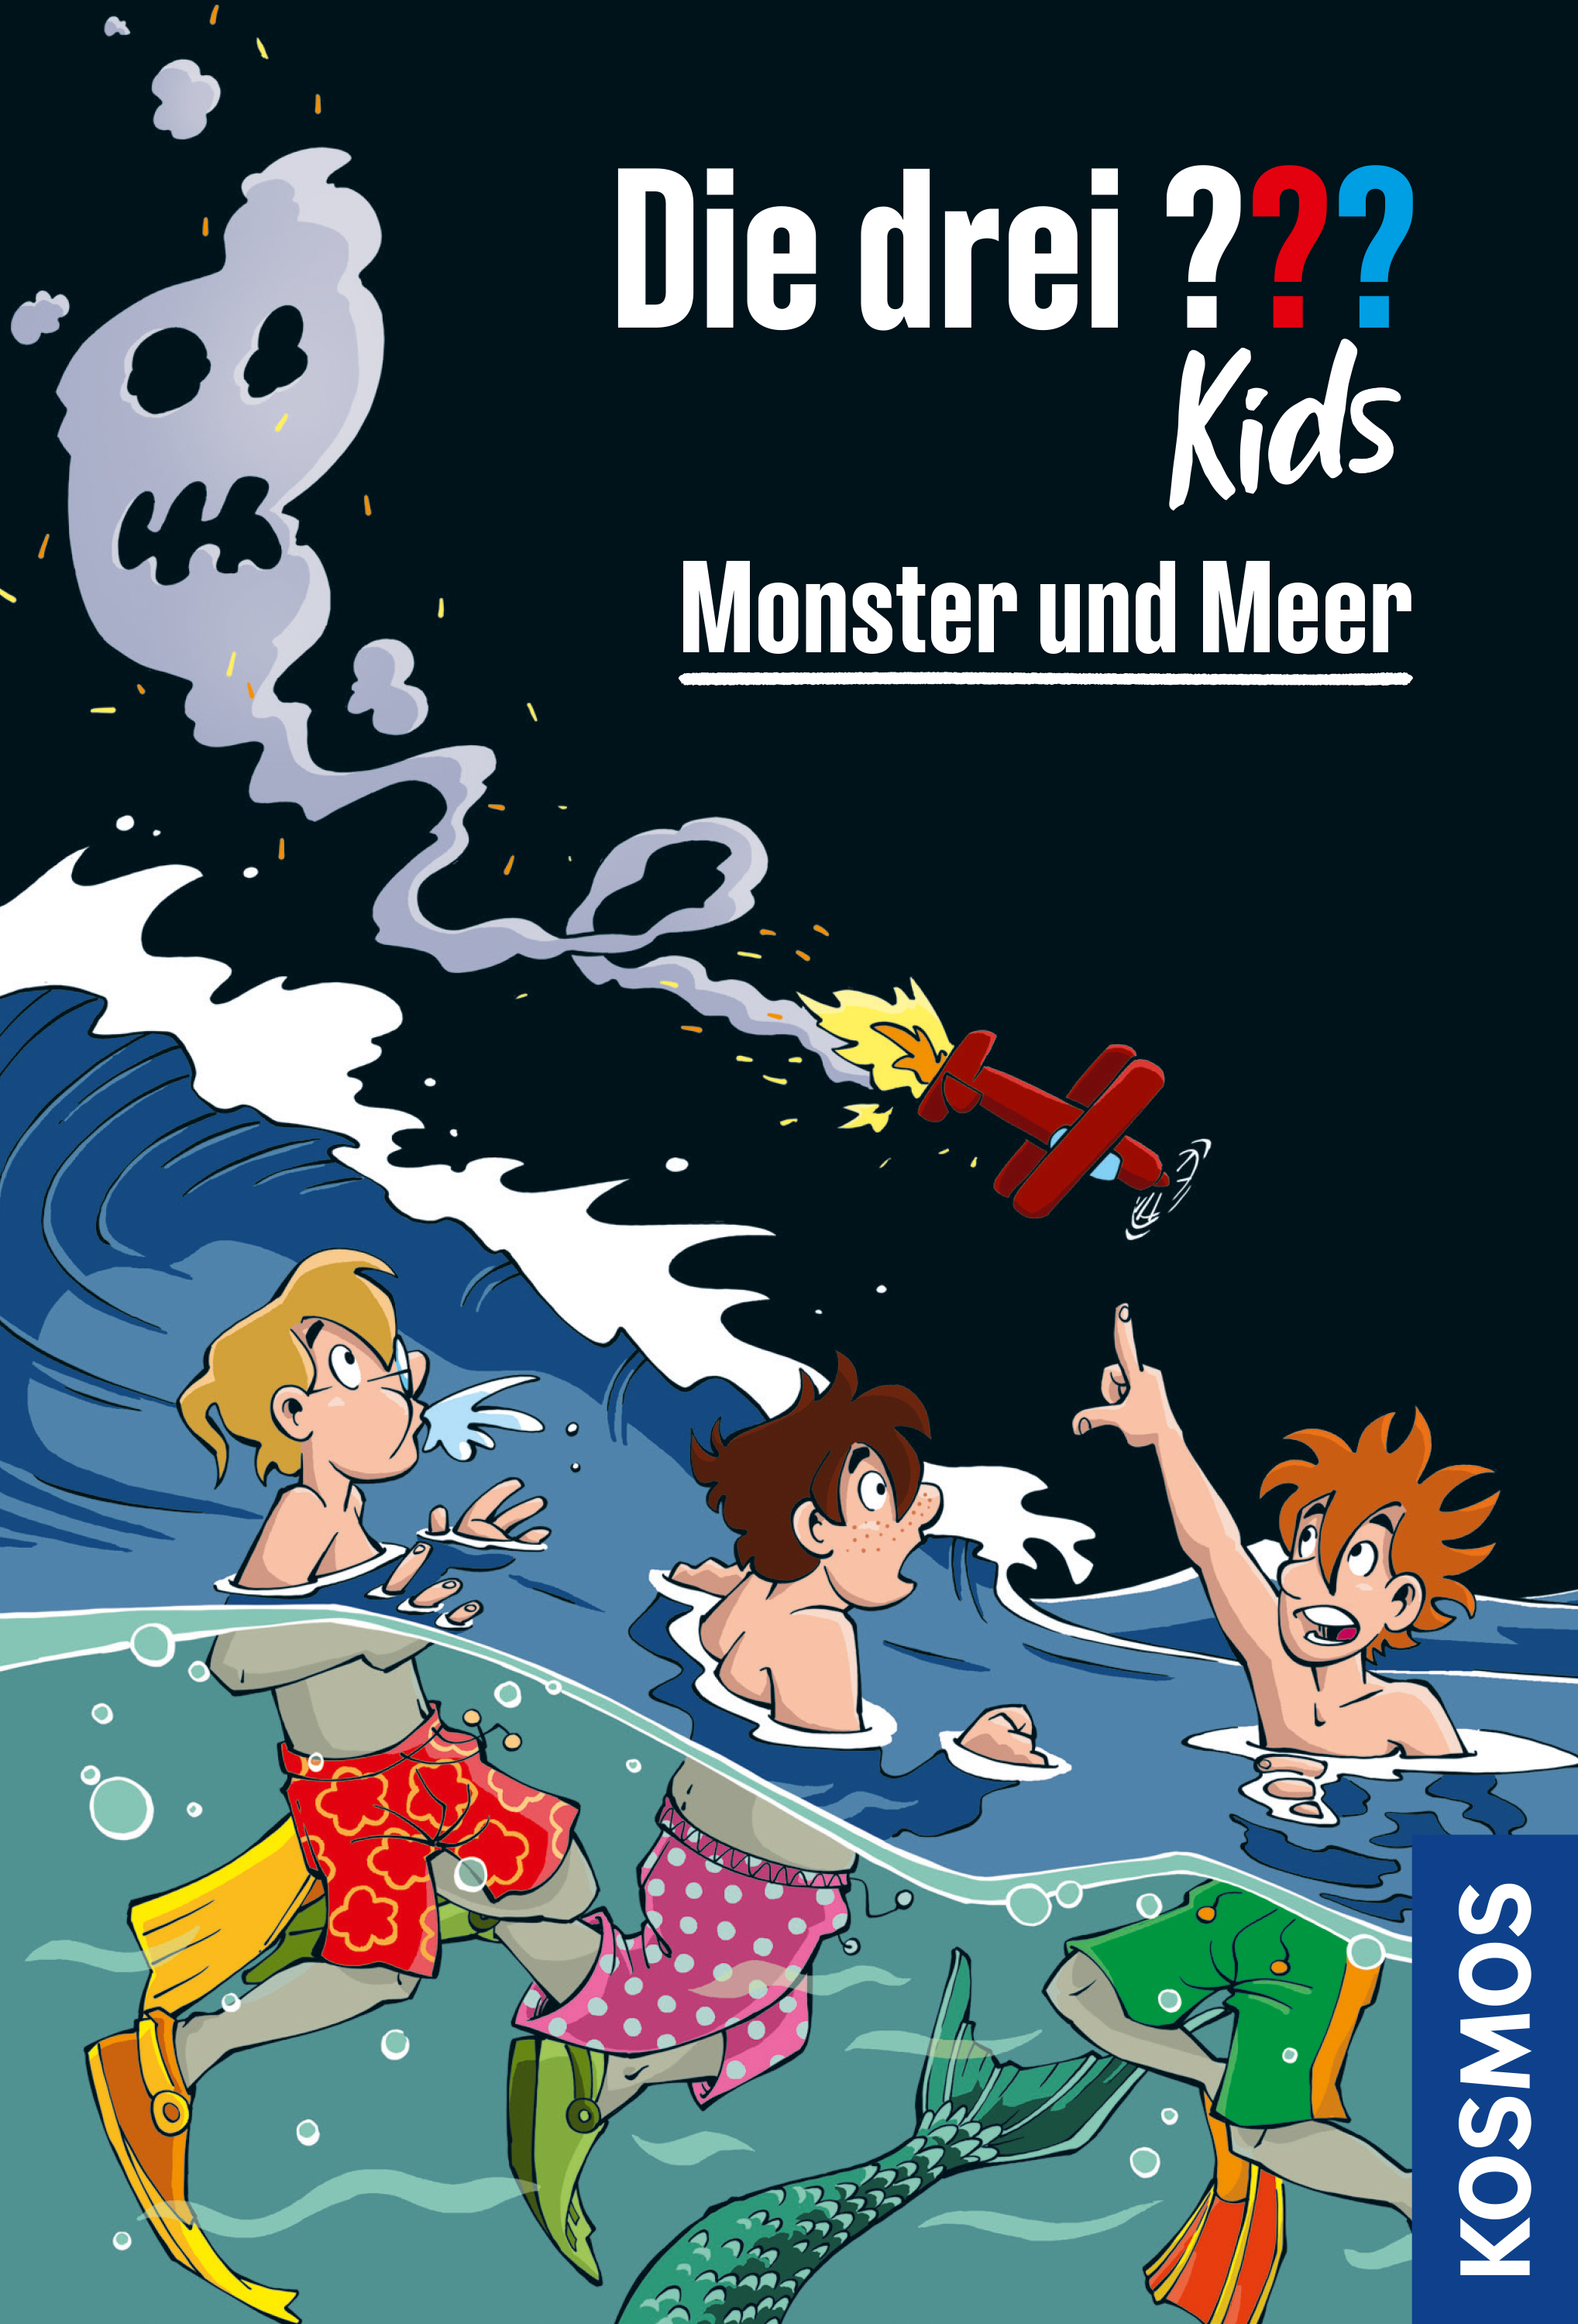 Die drei ??? Kids - Monster und Meer